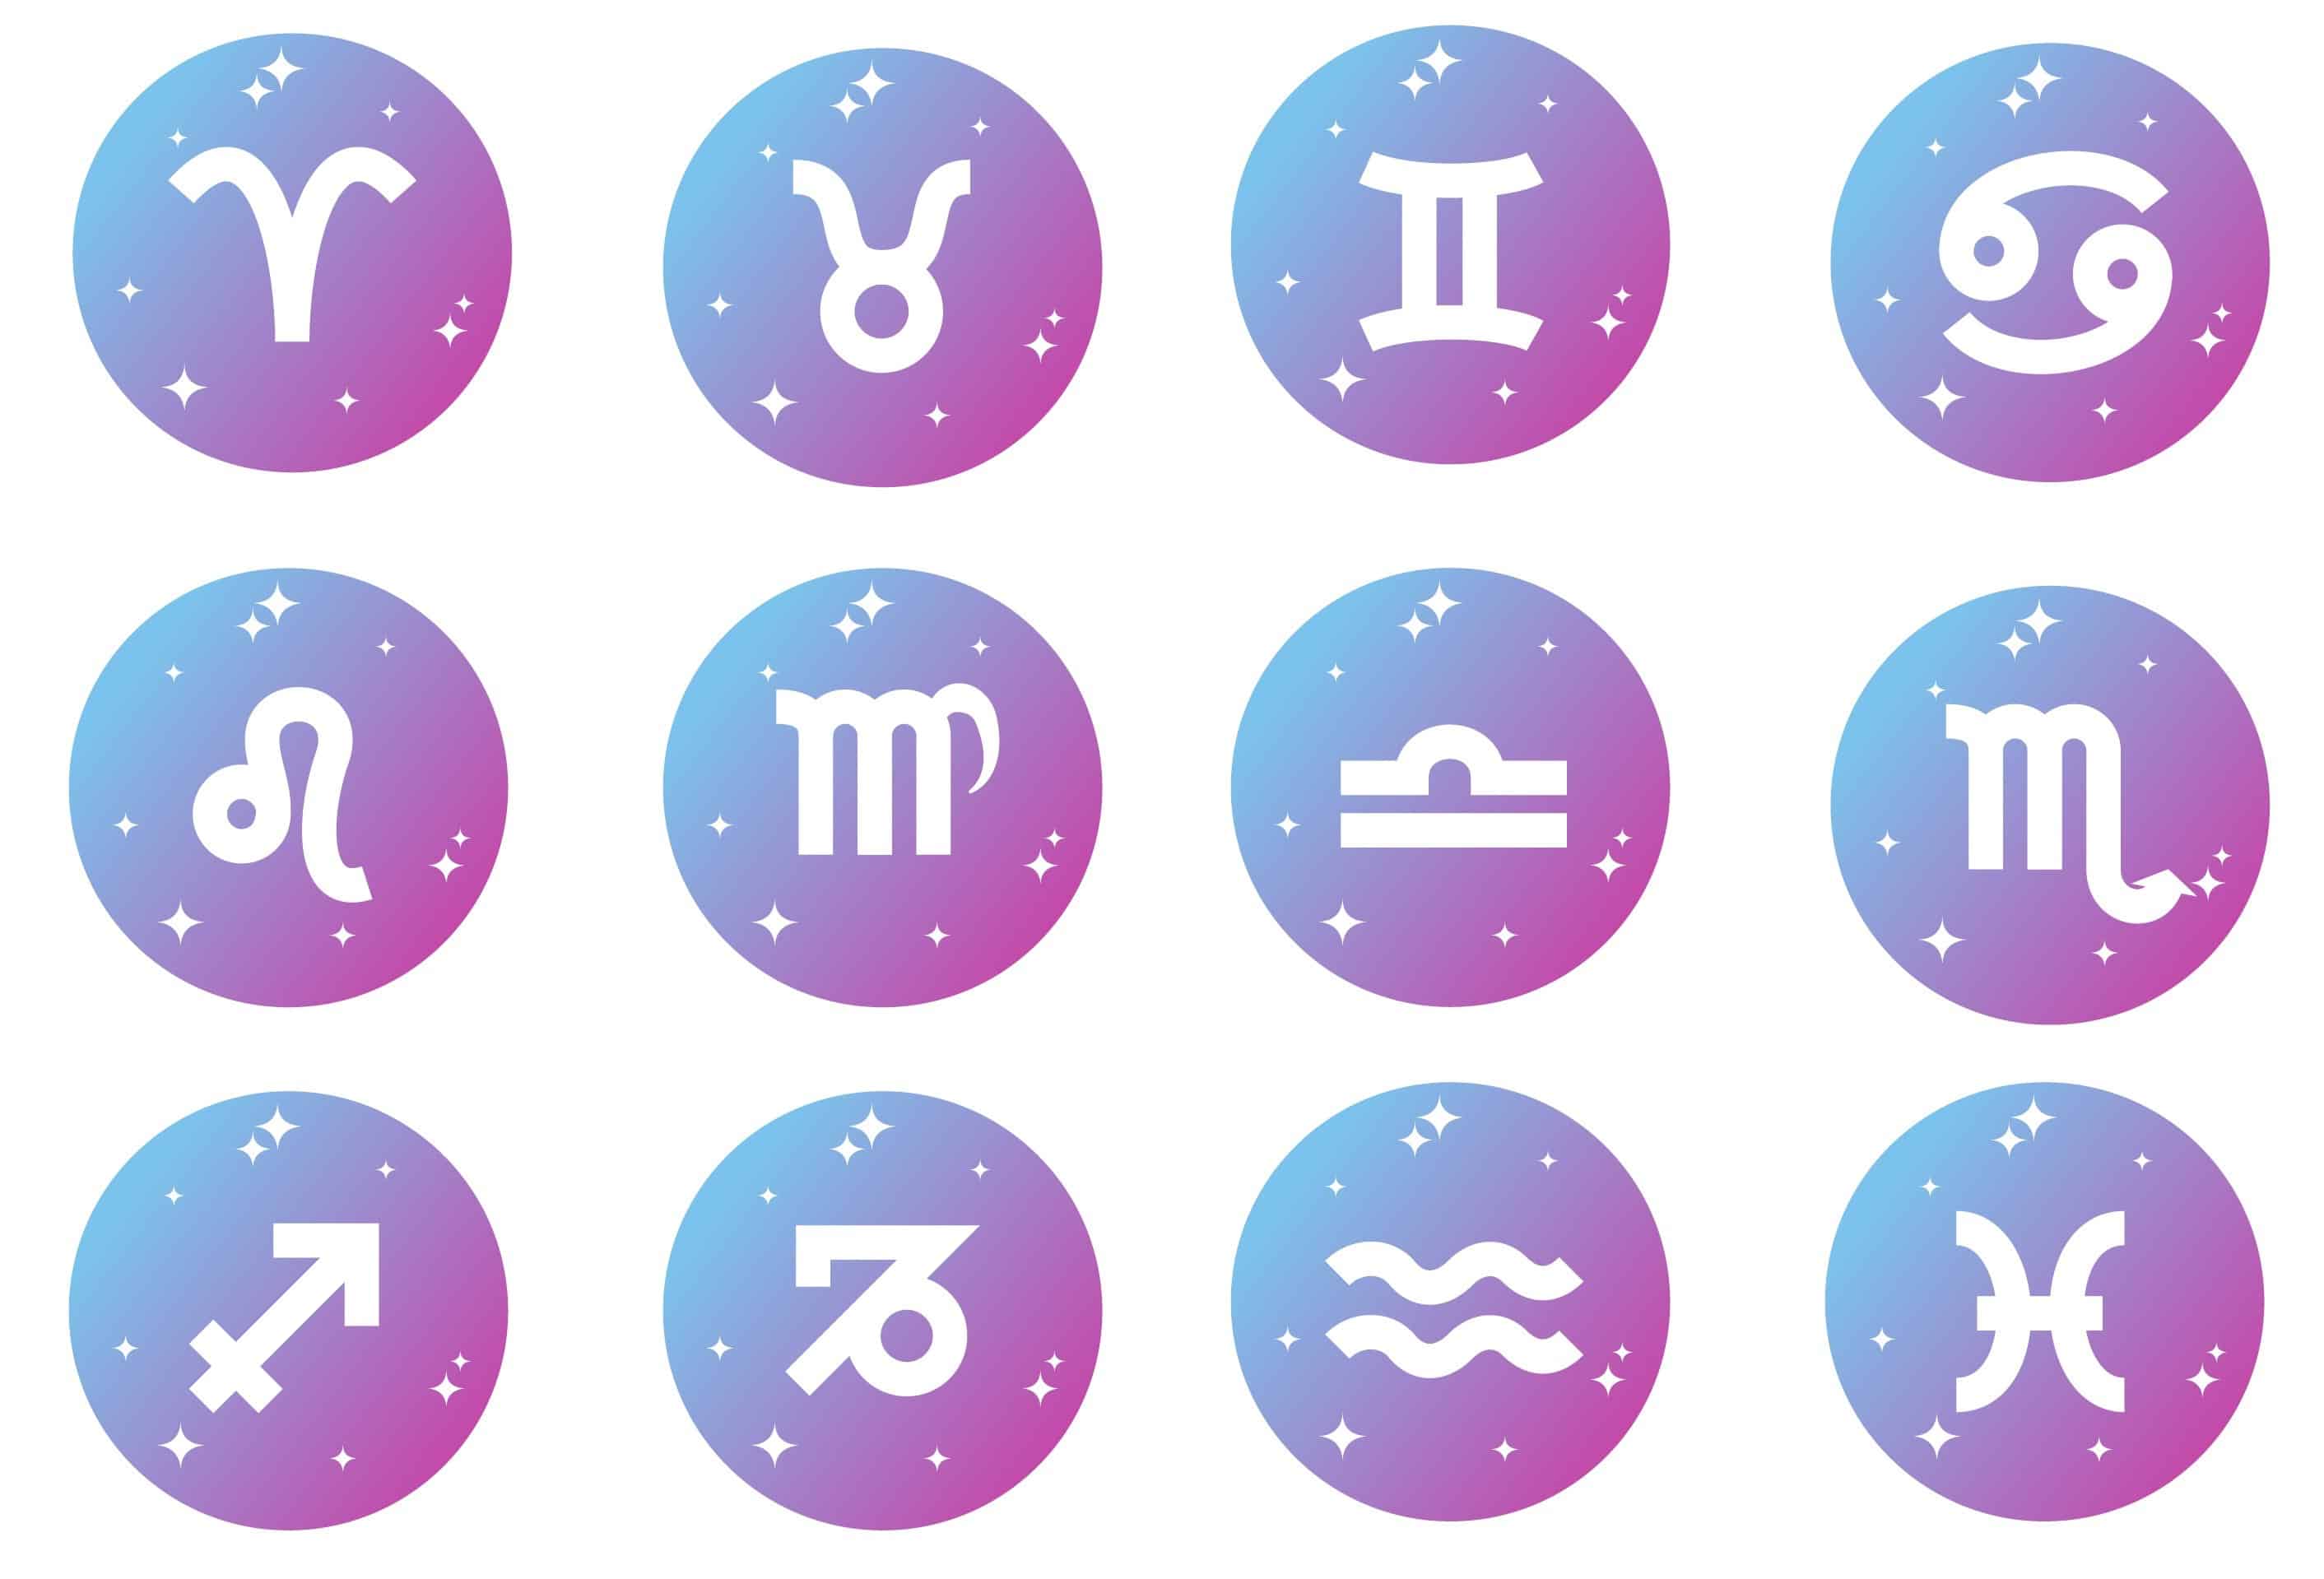 On zodiac snapchat signs 33 Astrology